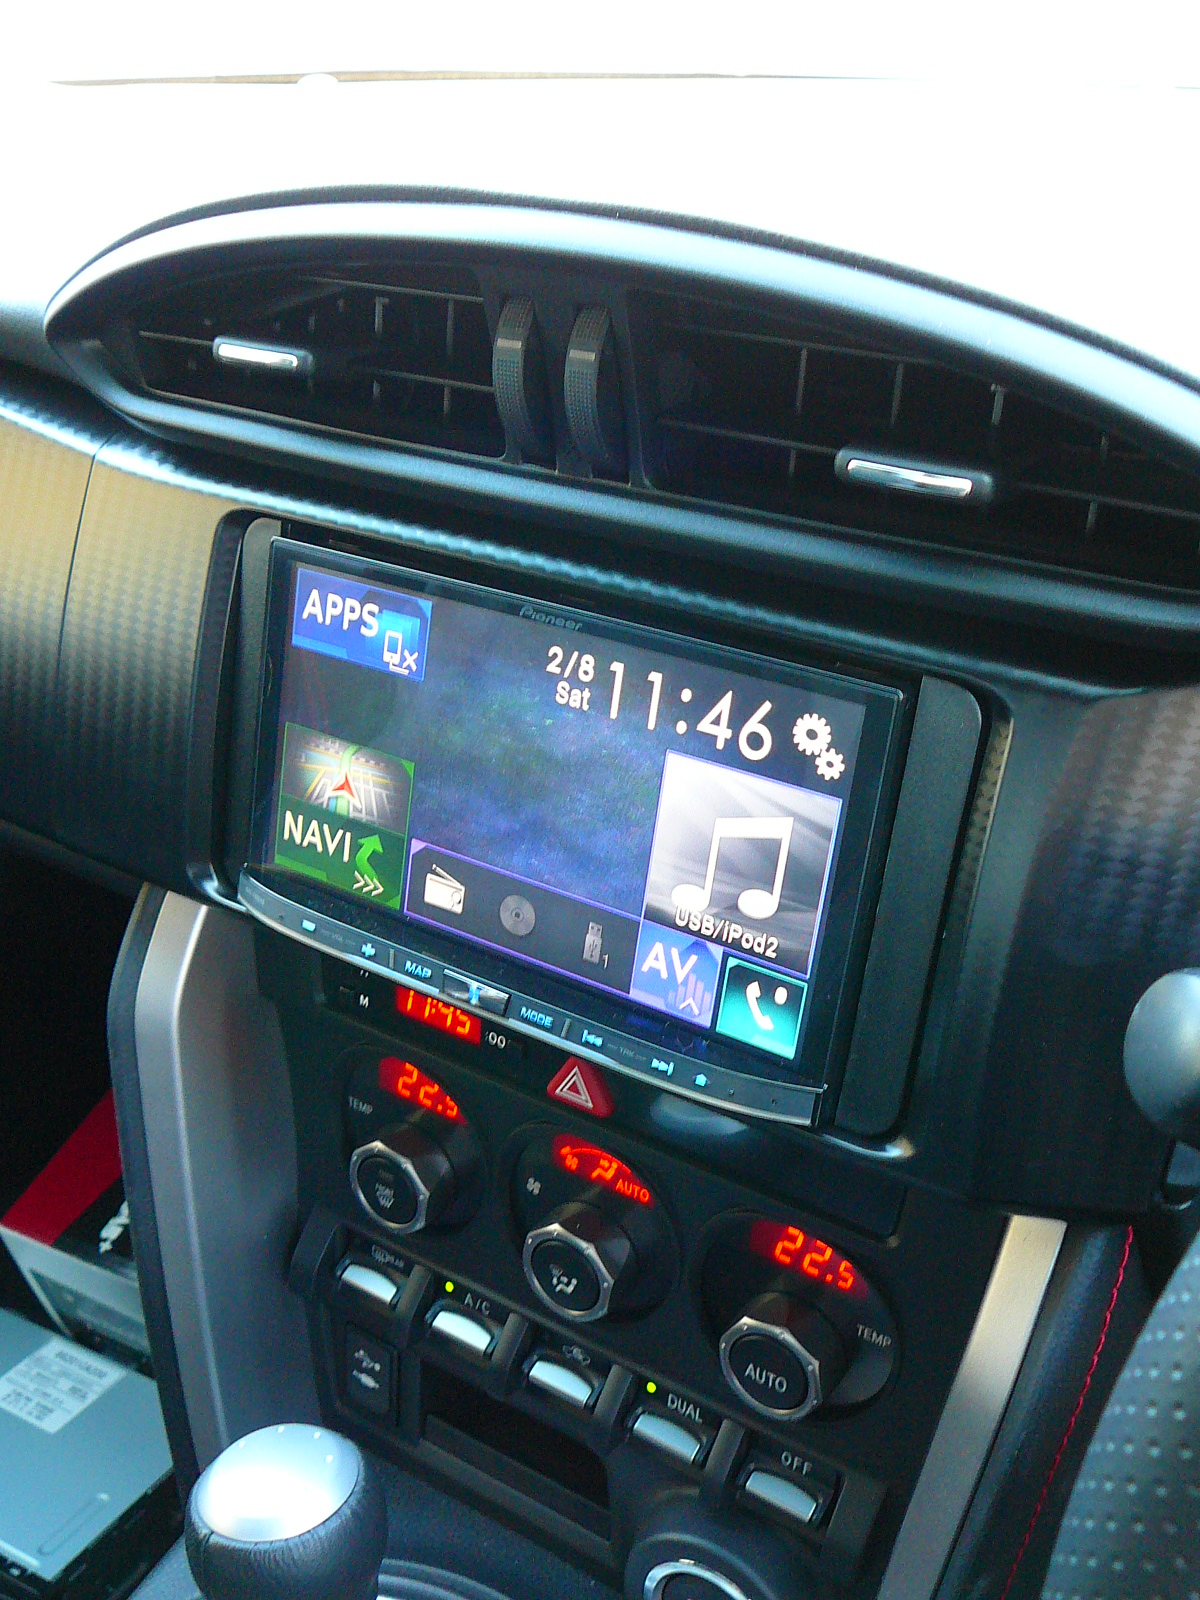 Subaru BRZ 2014, Pioneer Avic-F60DAB In dash GPS Navigation System with Reverse Camera